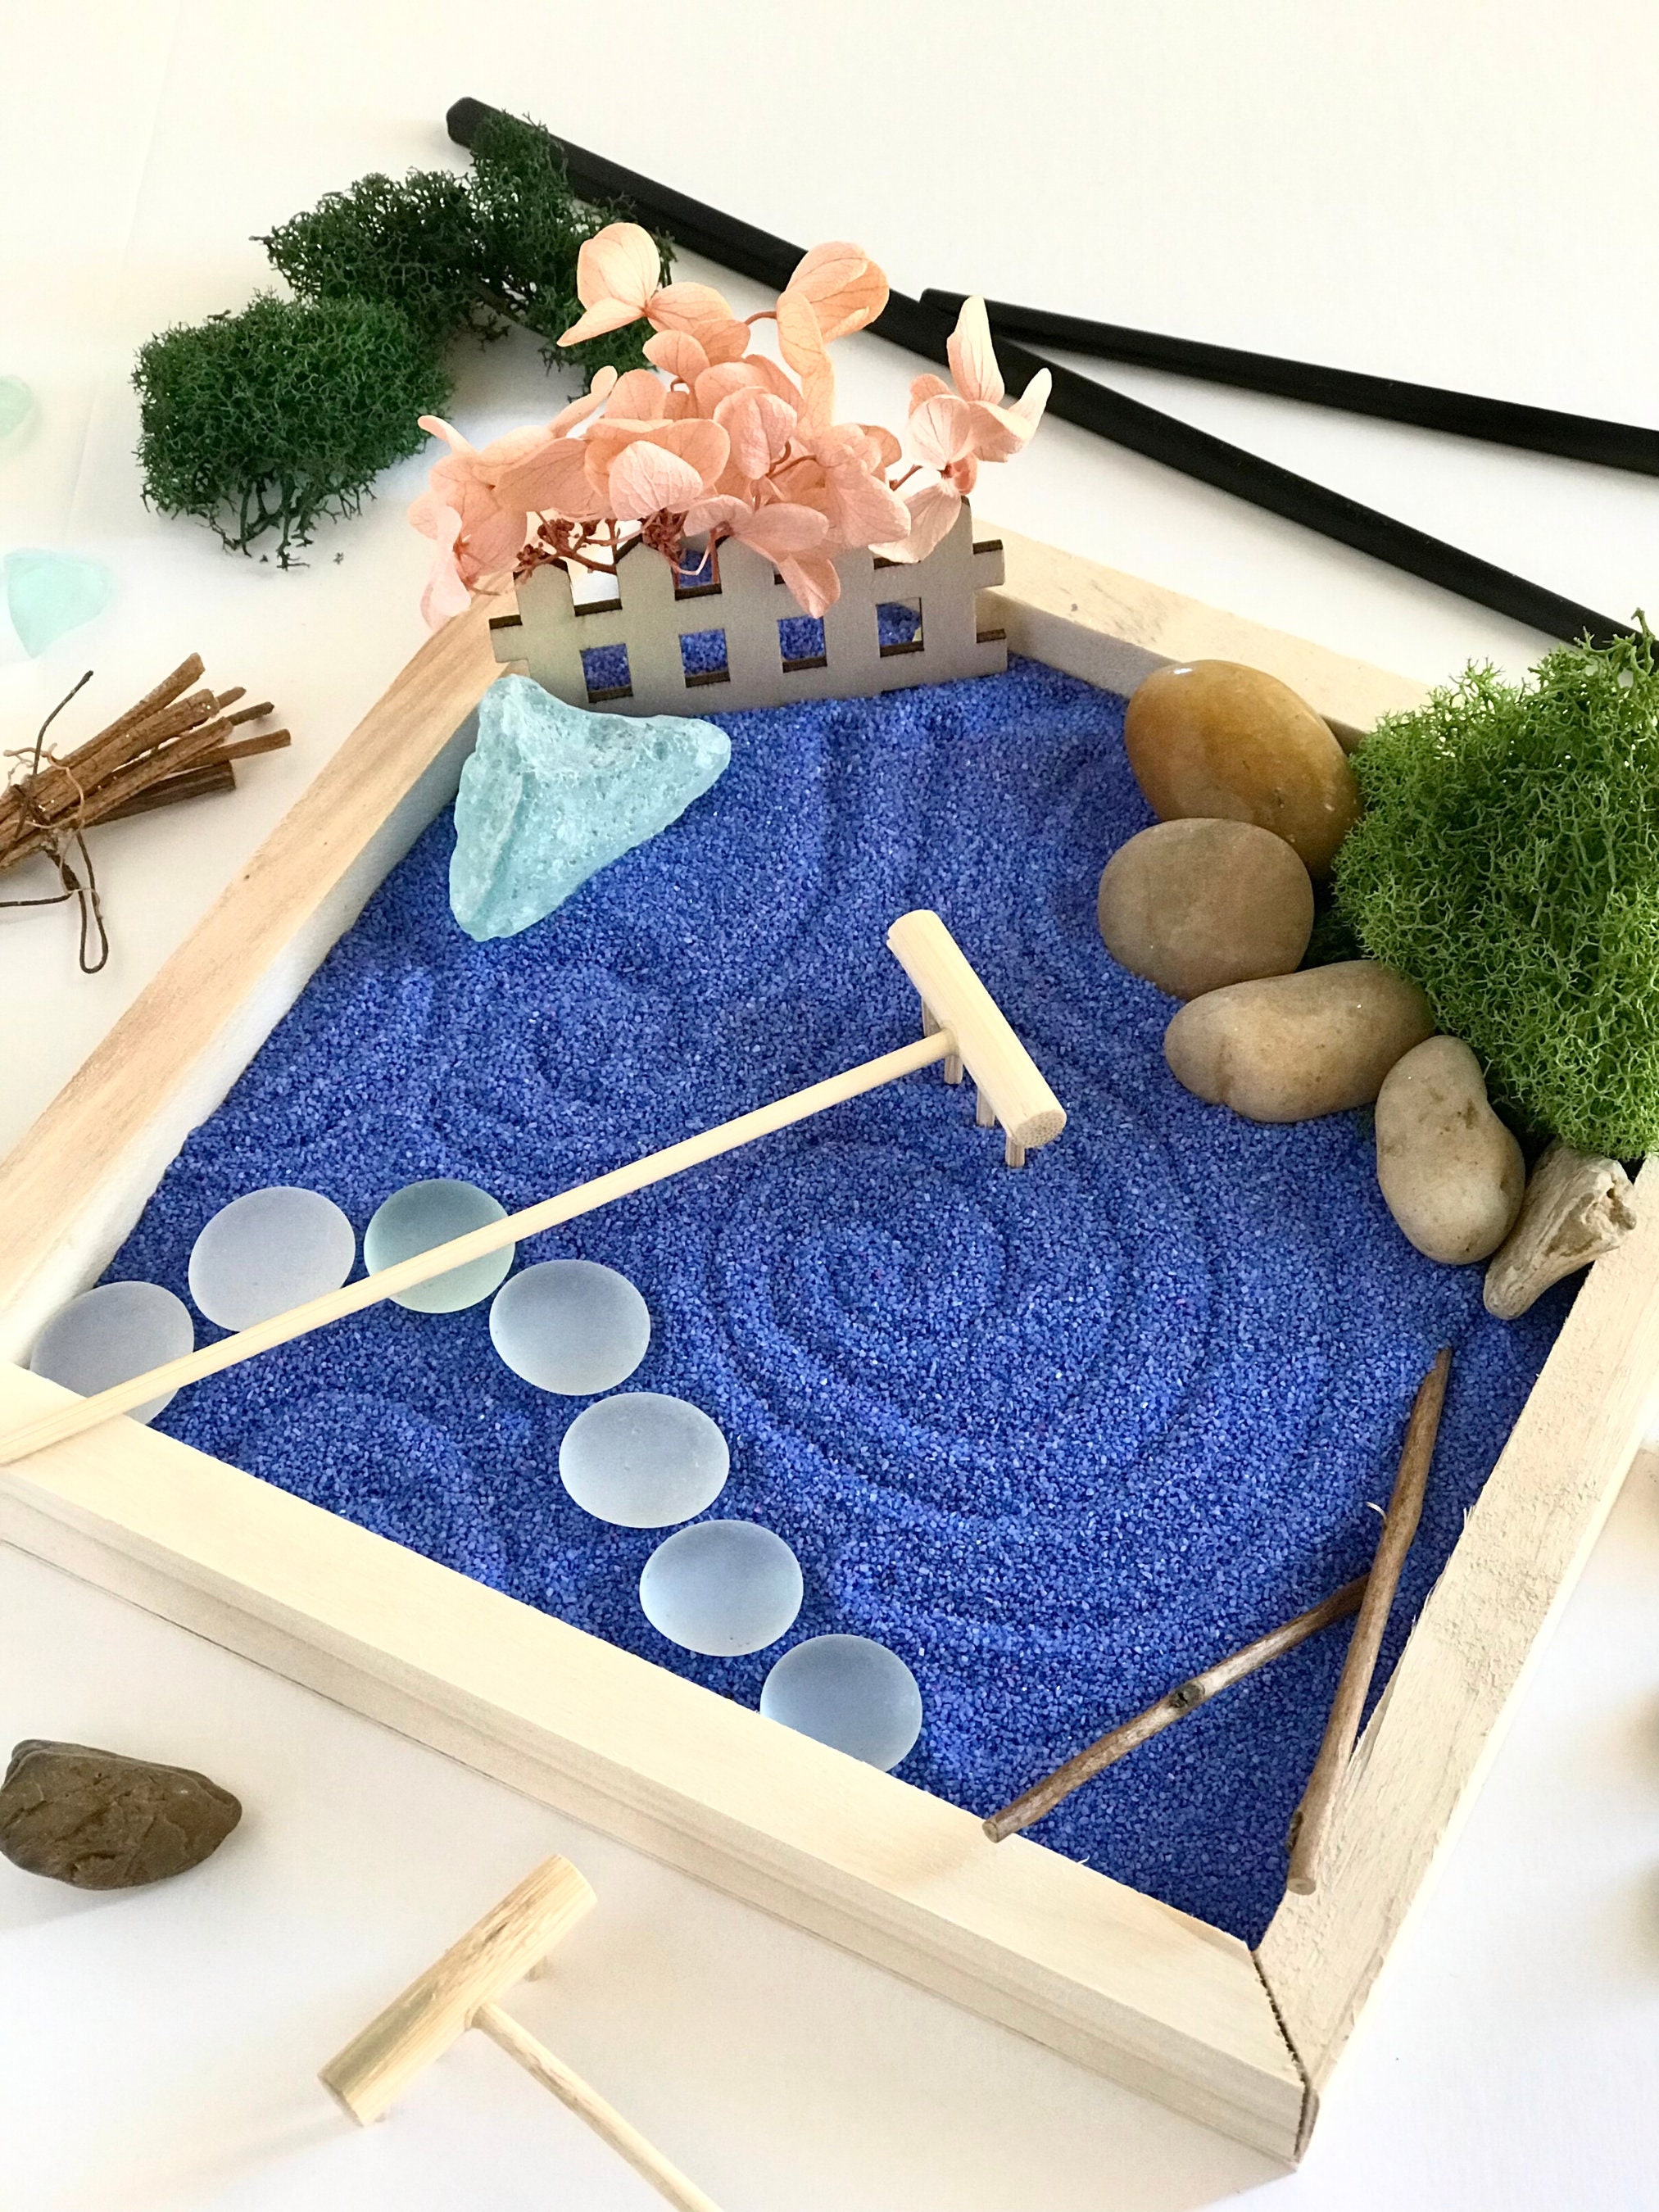 Desktop Meditation Yoga Zen Garden Kit Japanese Tabletop Rock Sand